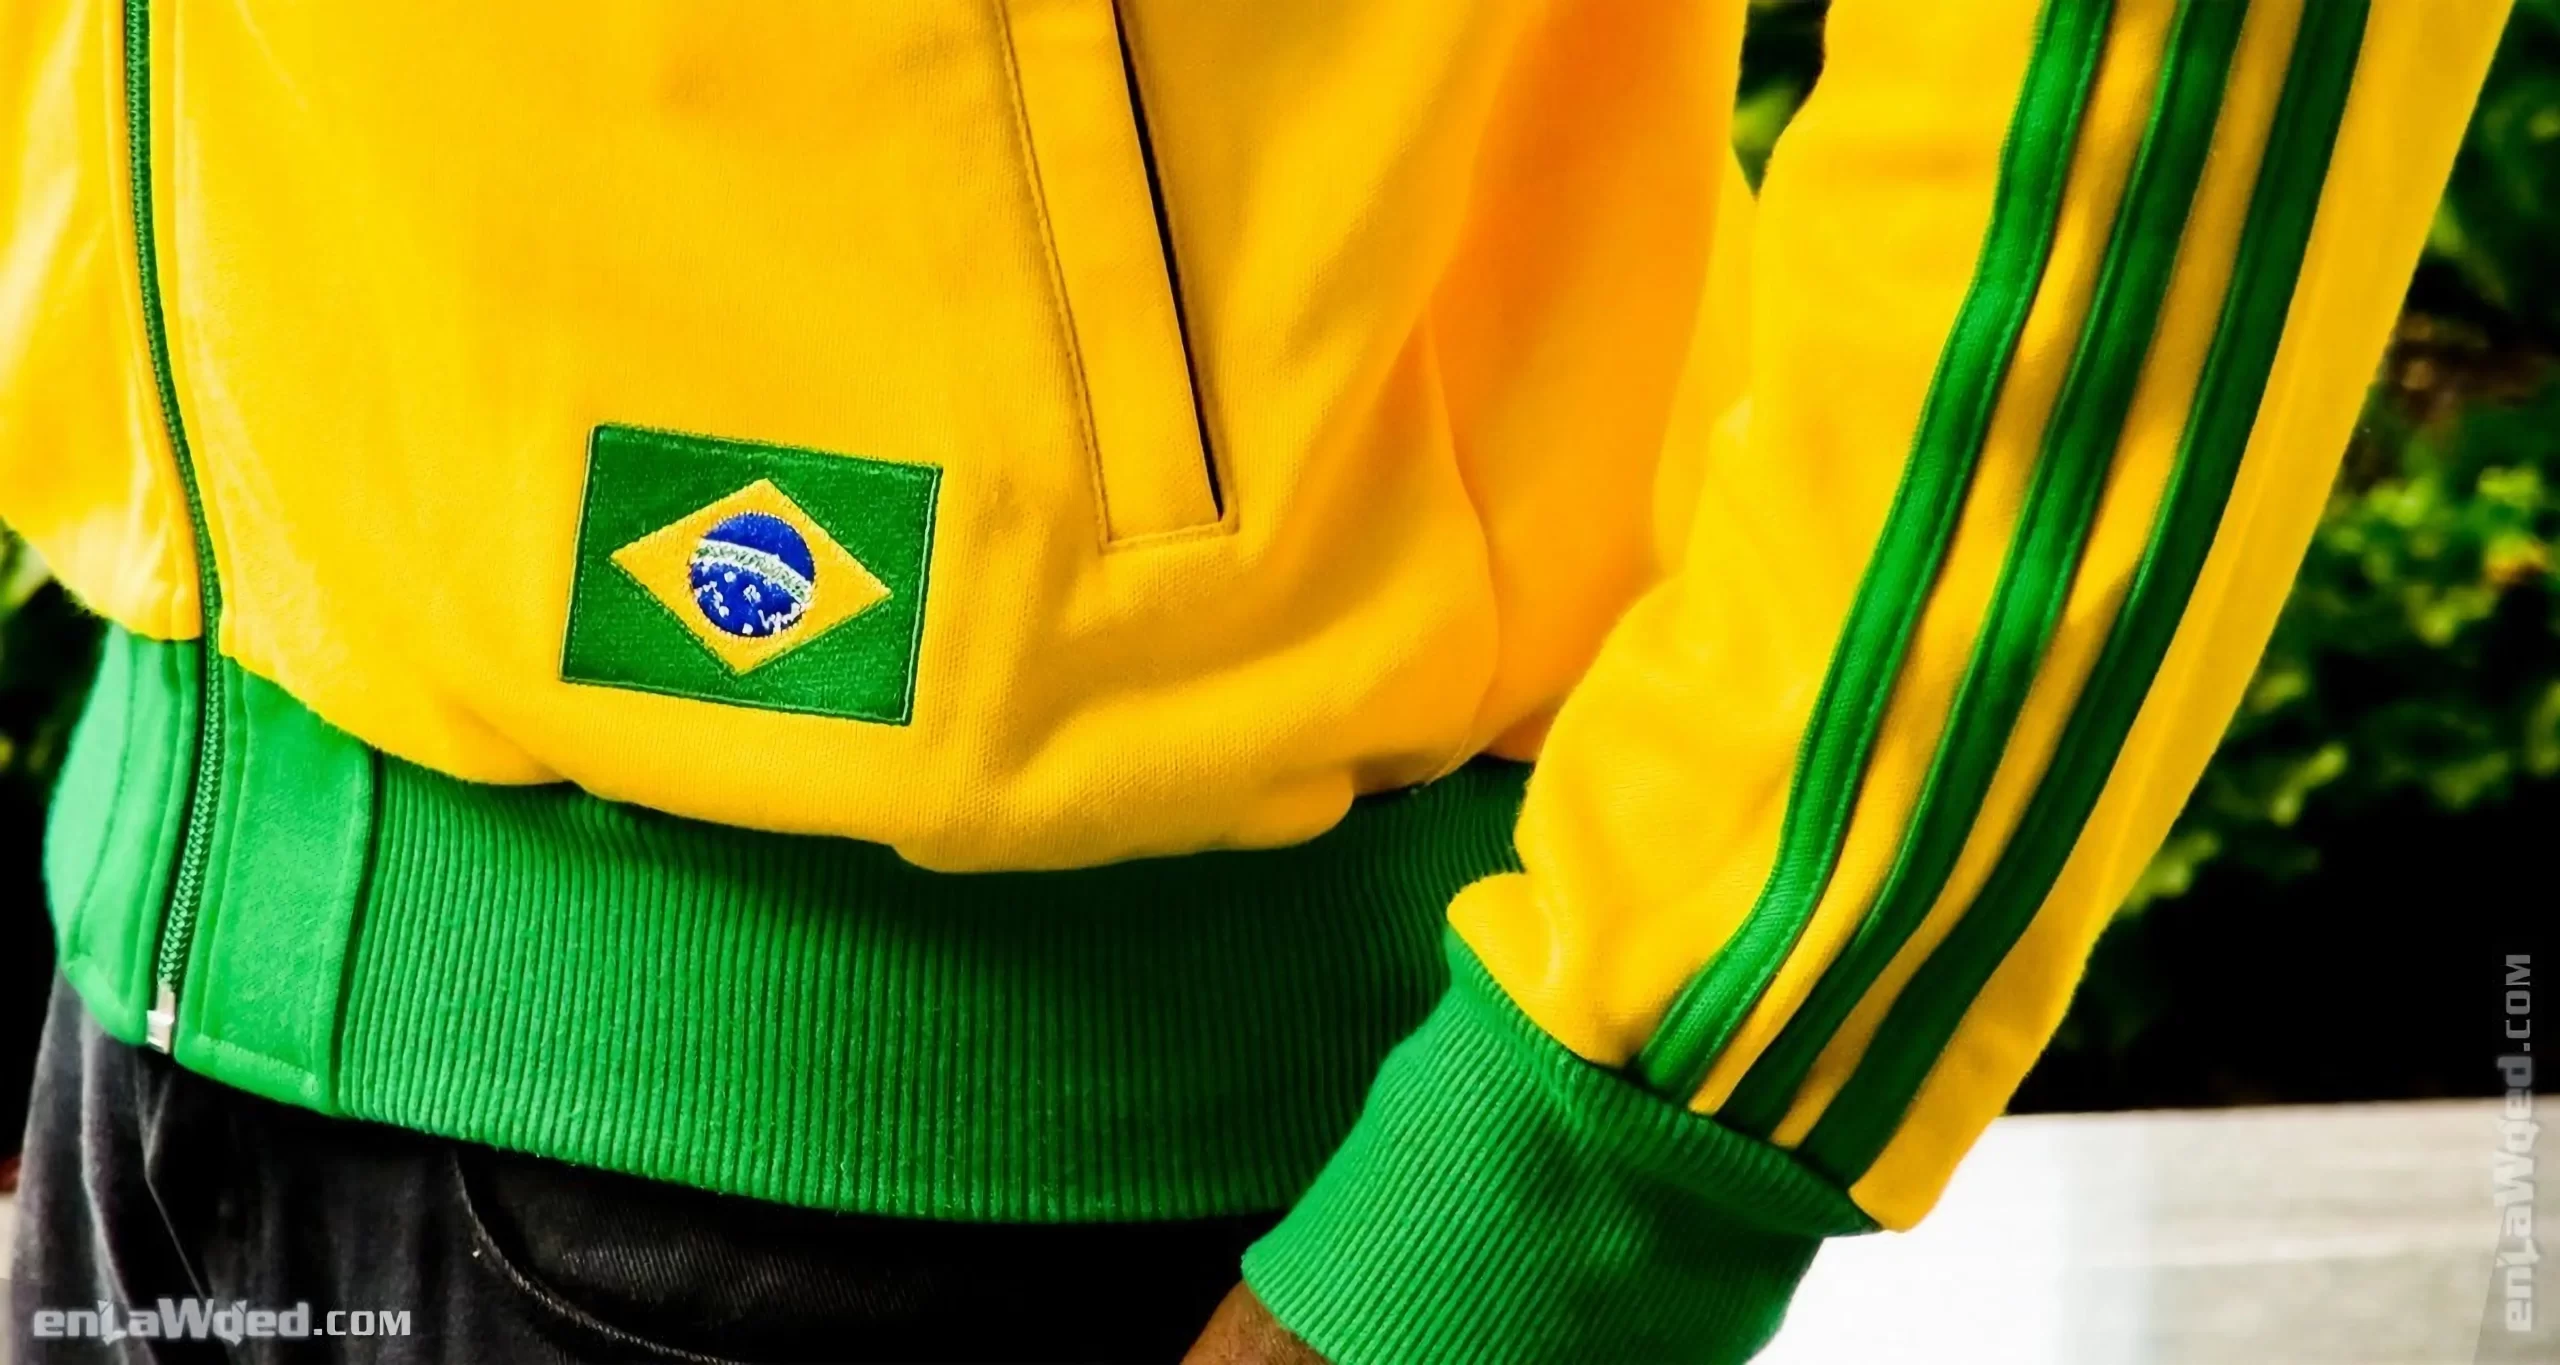 Men’s 2006 Rio de Janeiro TT-Two by Adidas Originals: Tremendous (EnLawded.com file #lmchk90422ip2y122325kg9st)